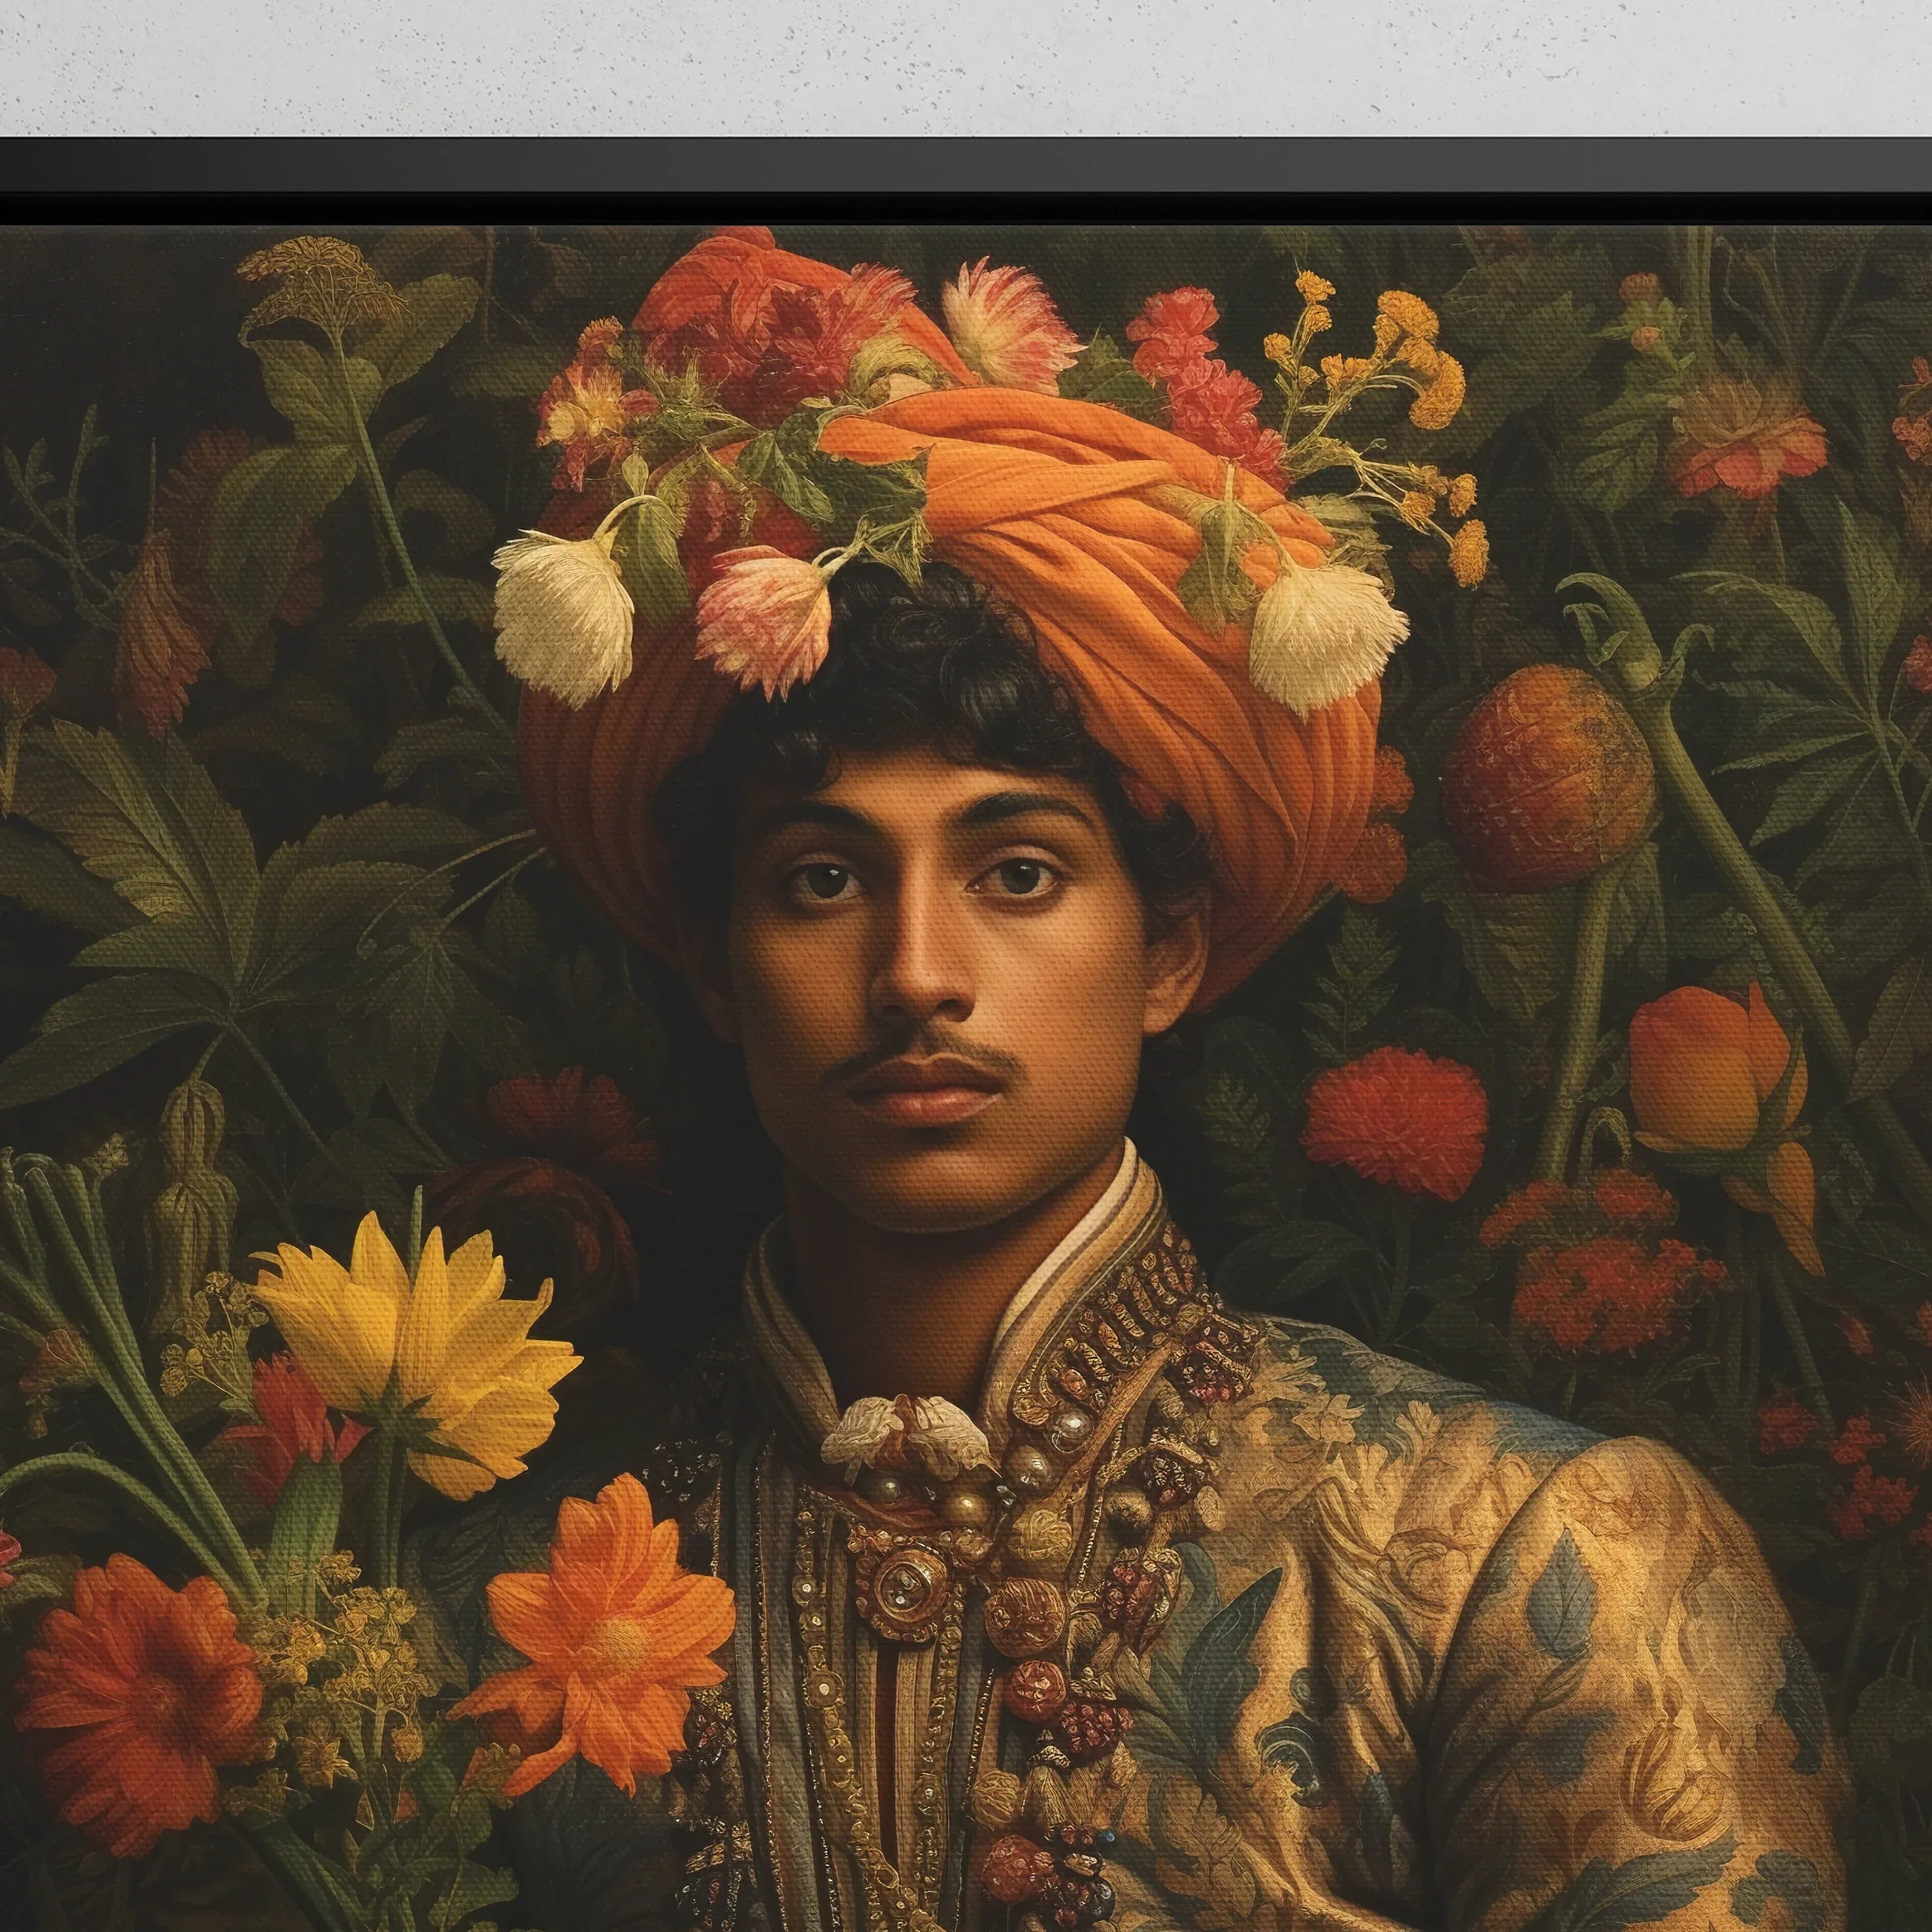 Prince Rajanikanta - Gay India Royalty Queerart Dandy Canvas - Posters Prints & Visual Artwork - Aesthetic Art